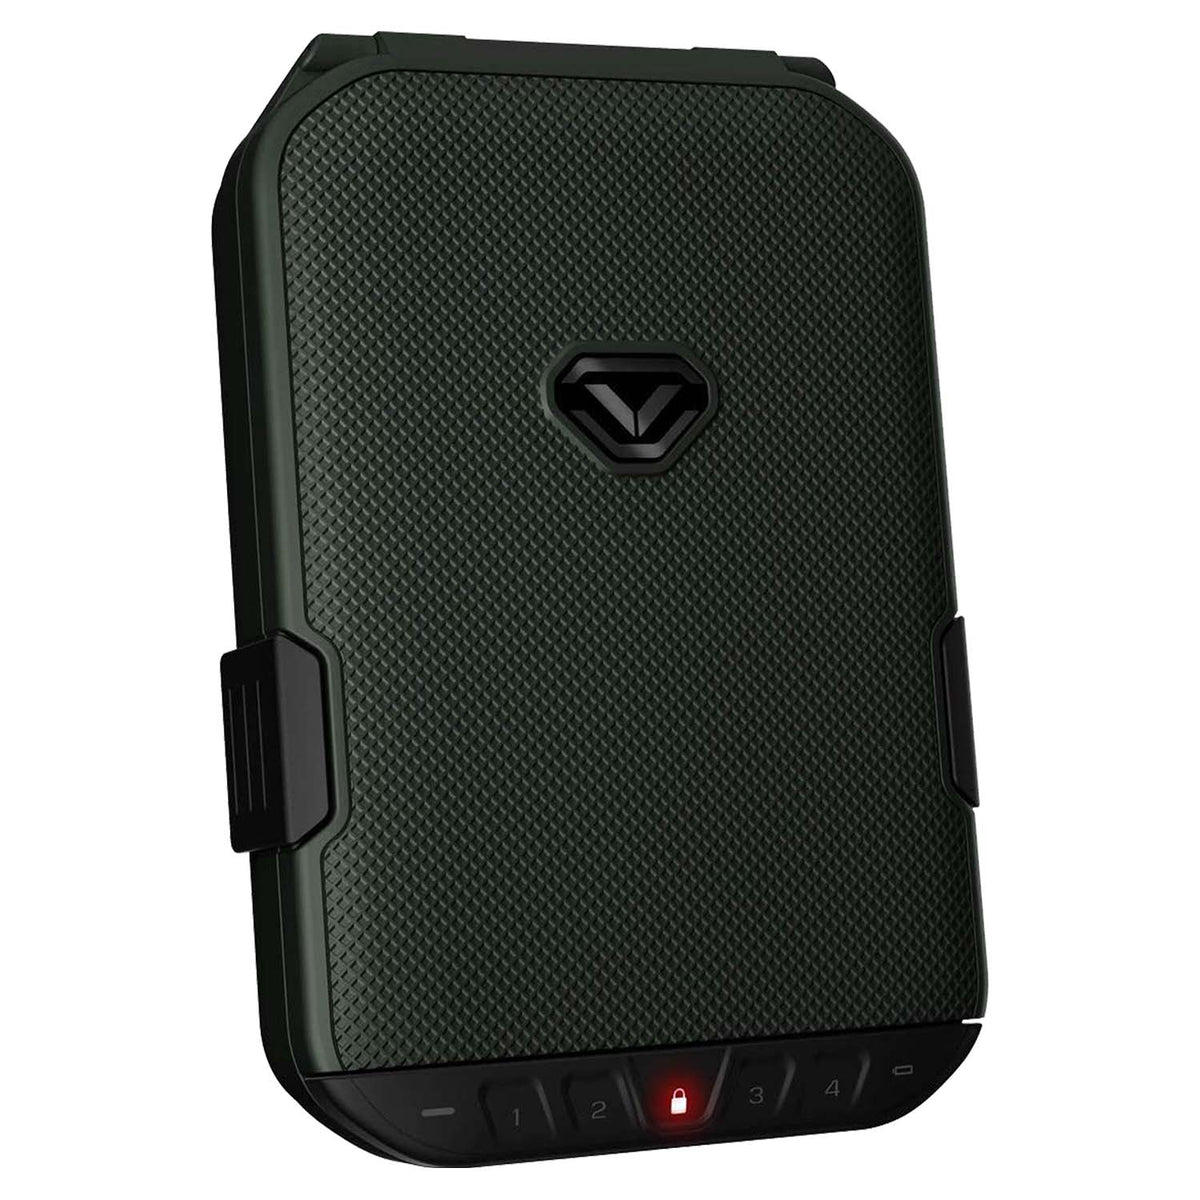 Vaultek - lifepod 1.0 rugged airtight weather resistant - Olive drab - MODLOCK